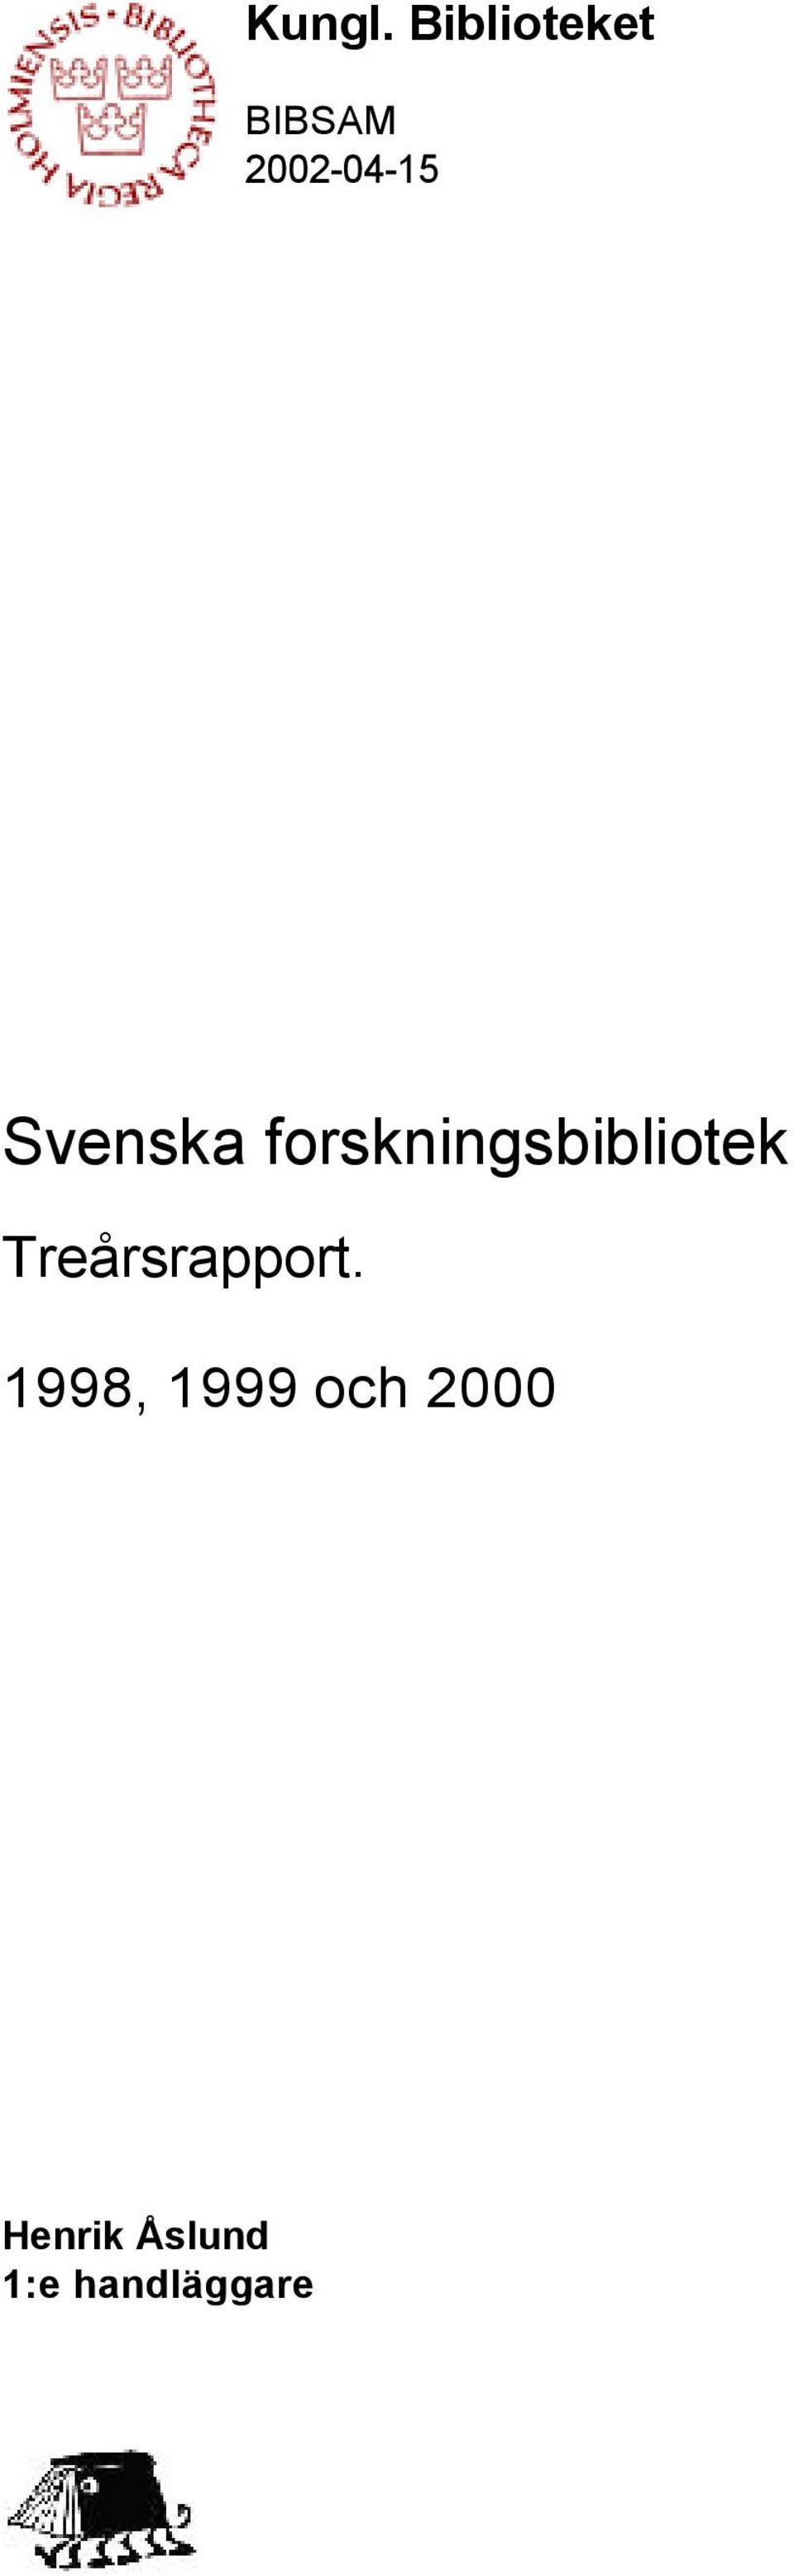 Svenska forskningsbibliotek